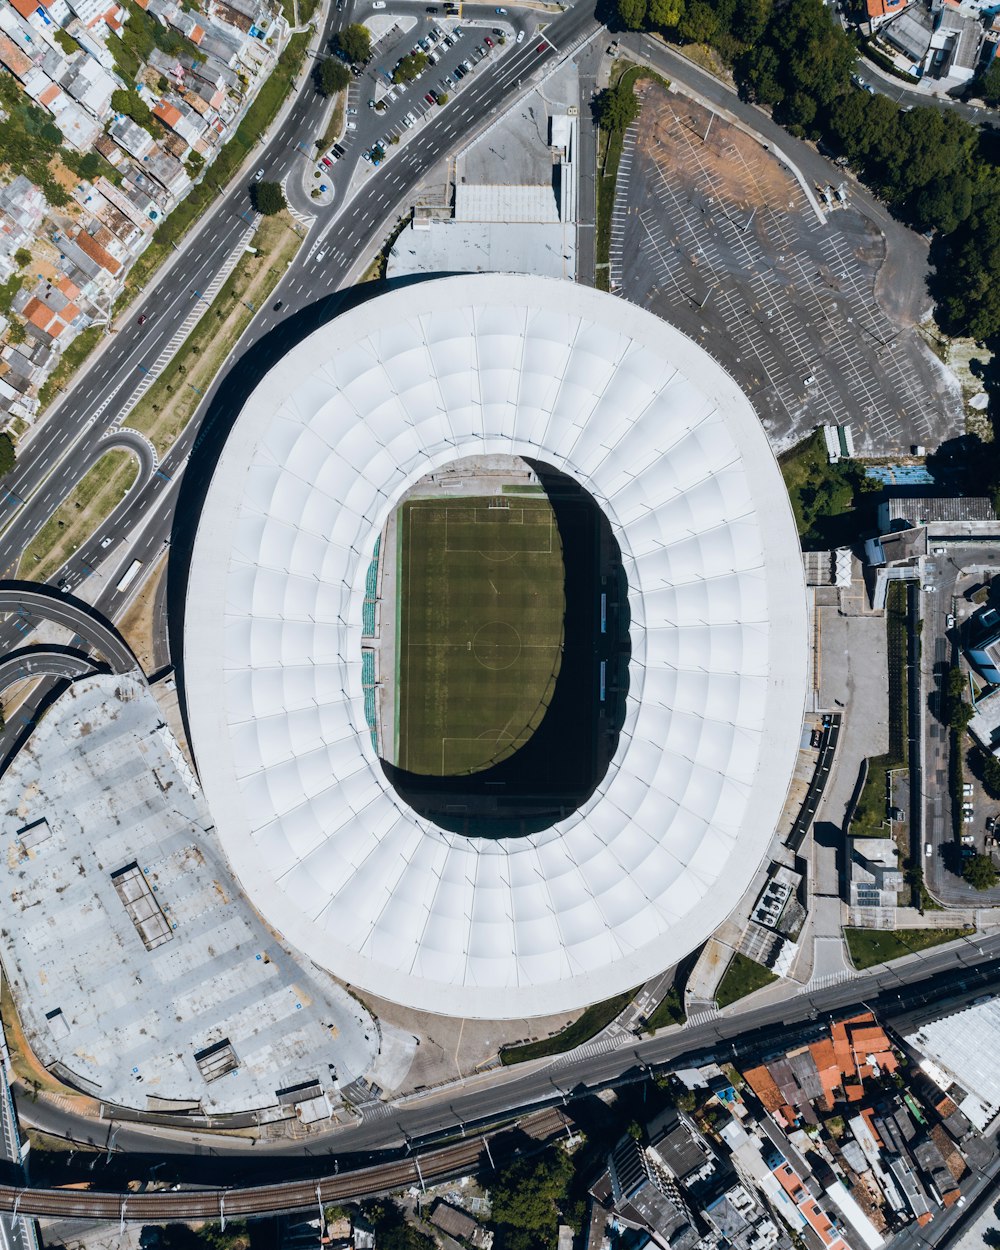 Photographie aérienne d’un stade de football